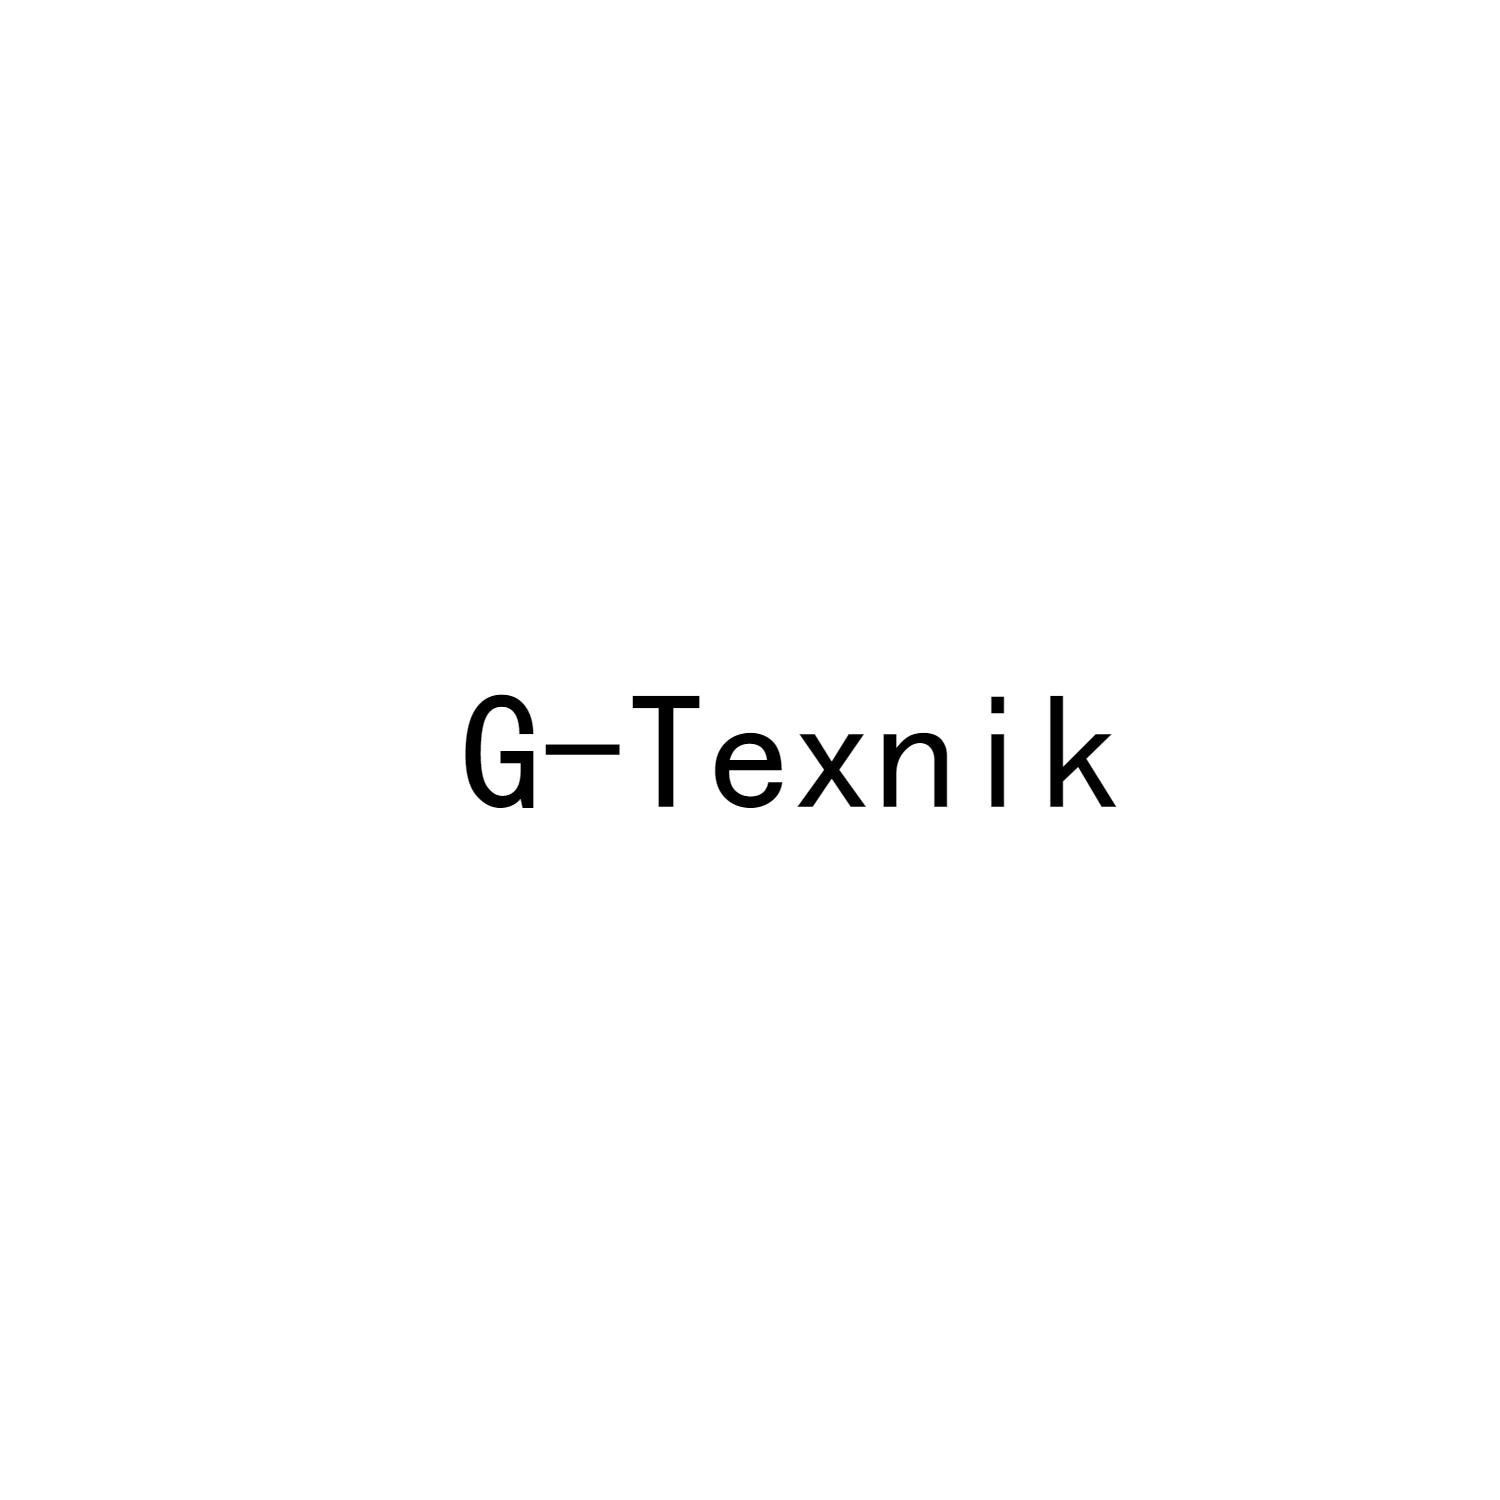 G-TEXNIK